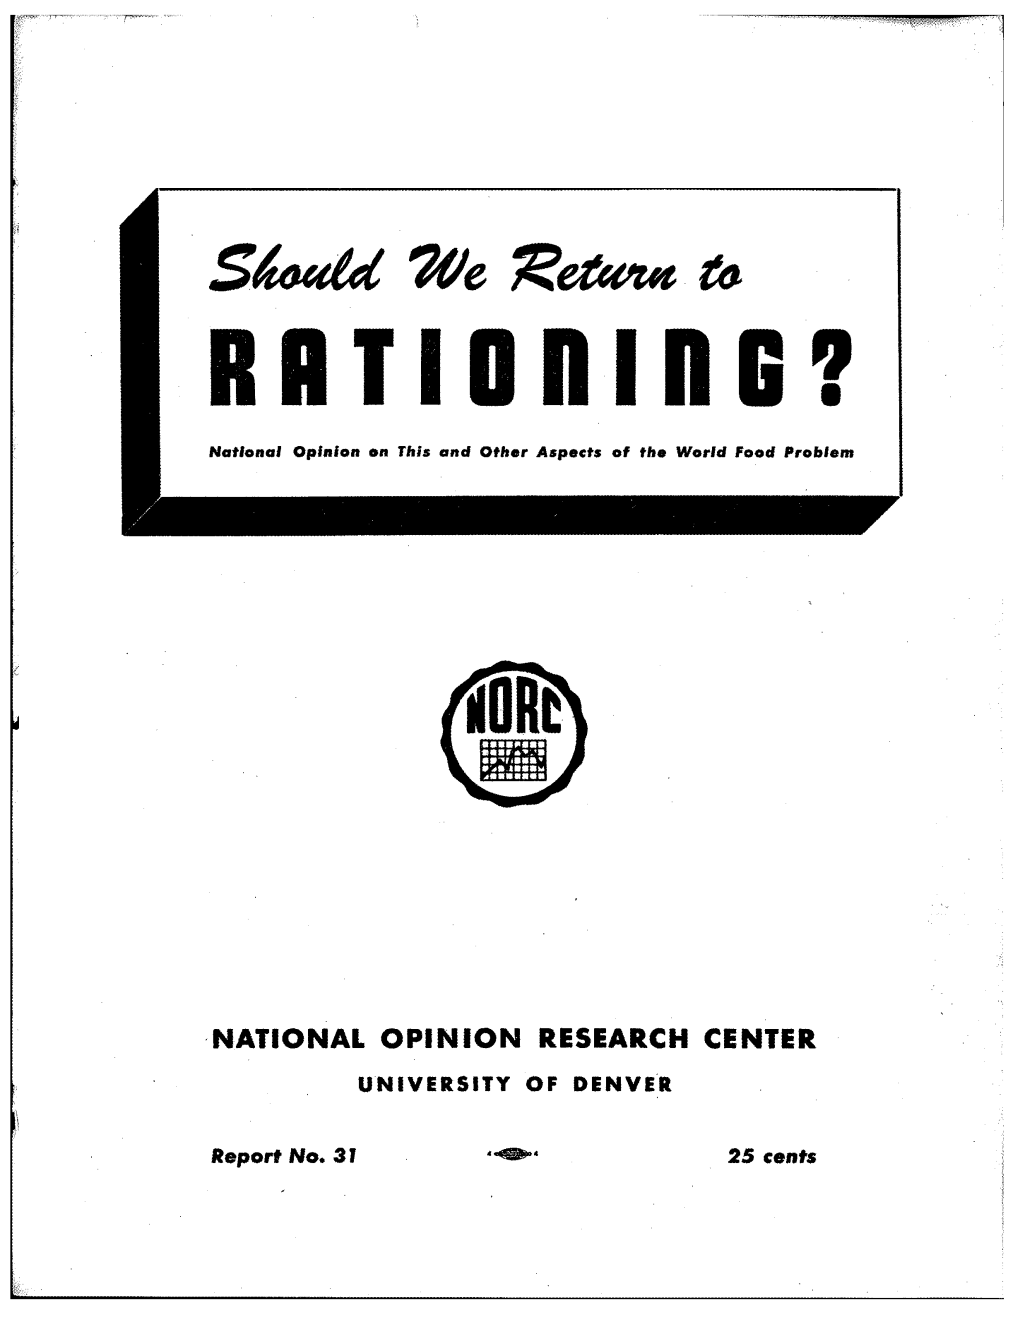 Should We Return to Rationing?